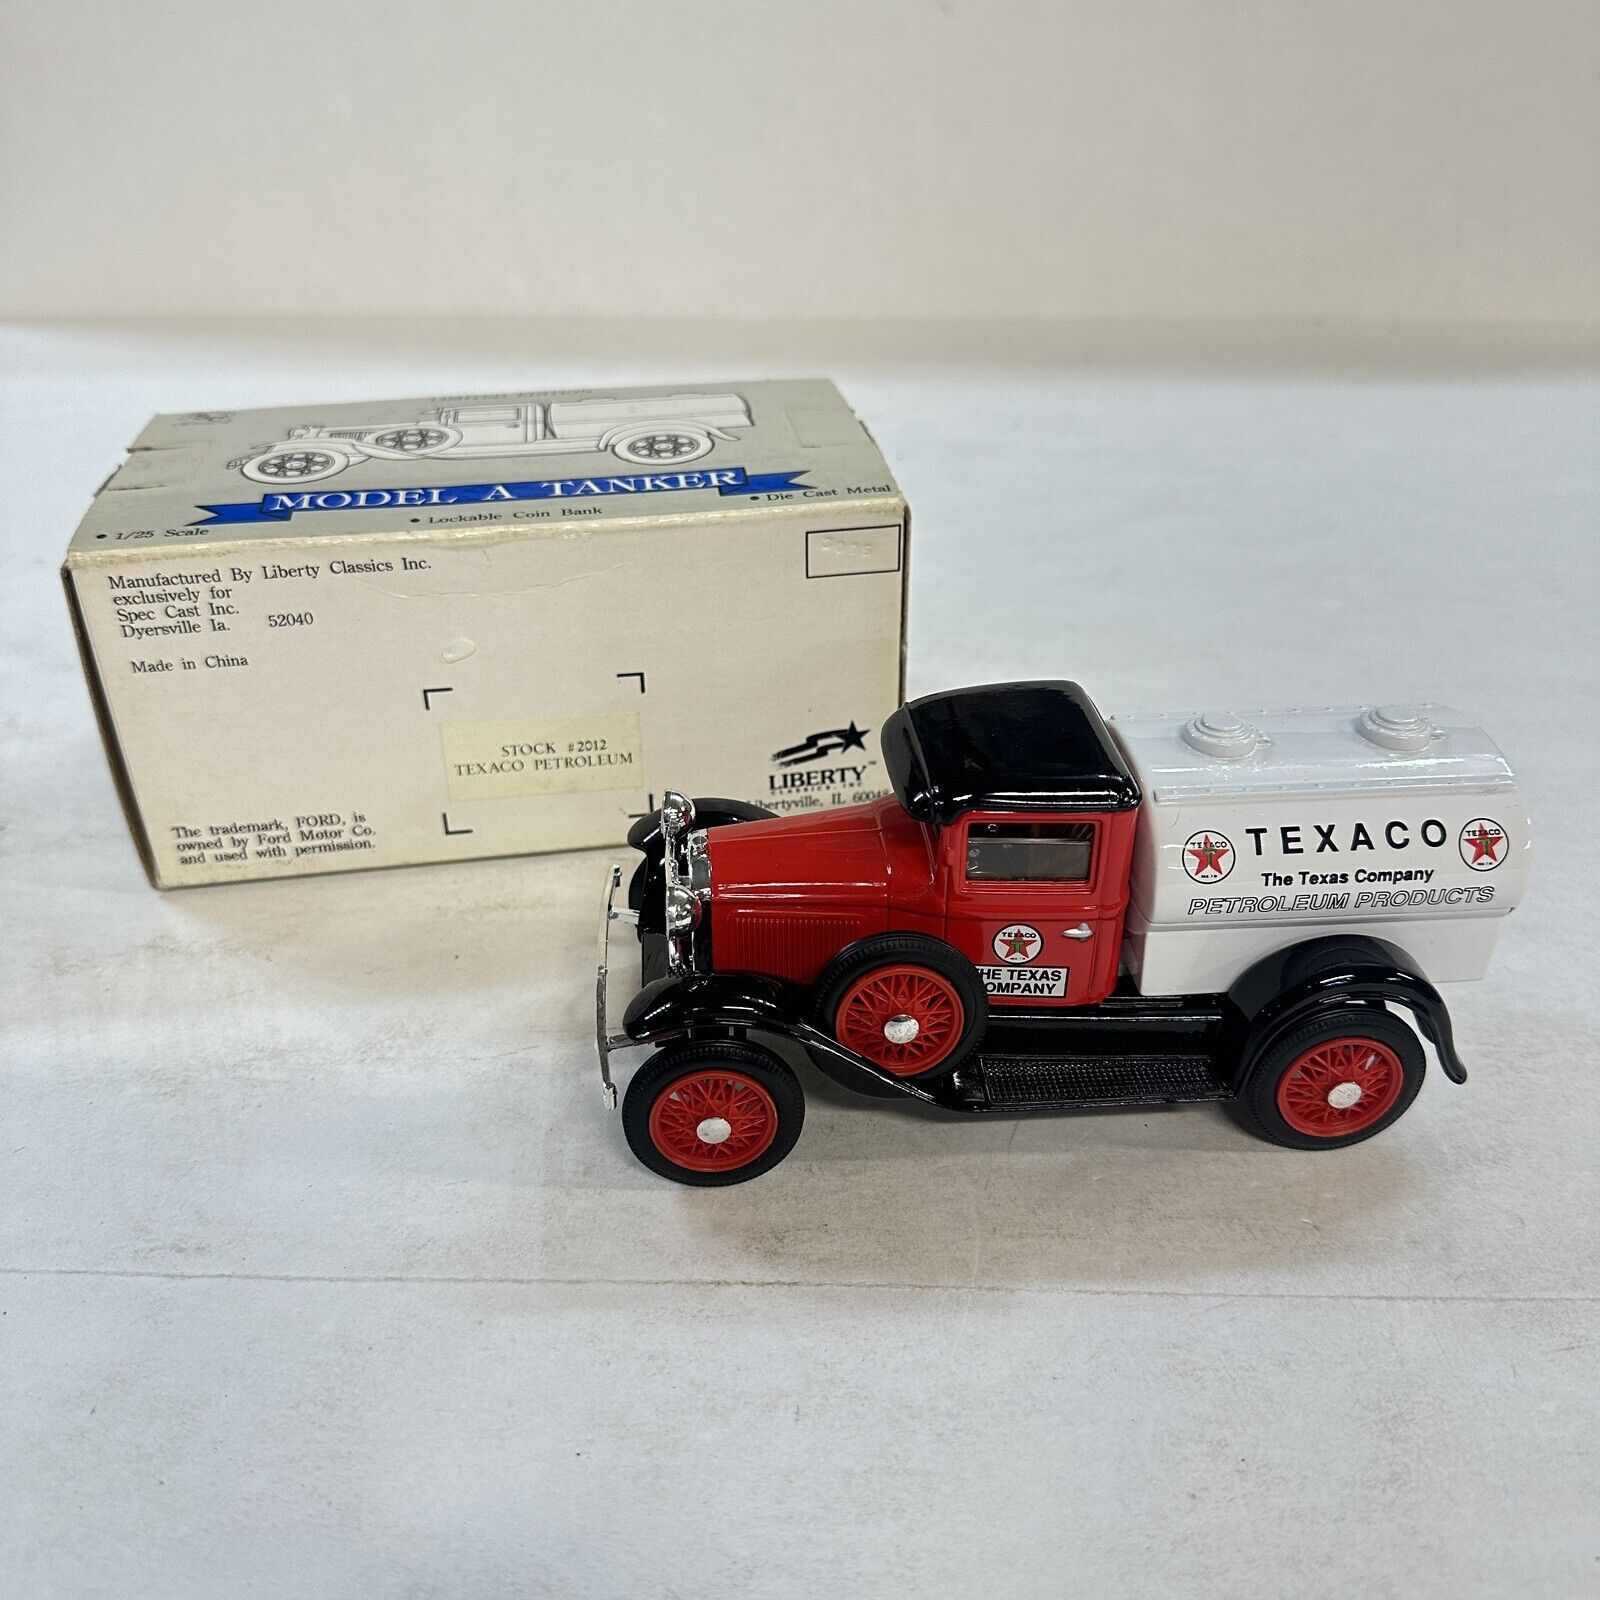 Liberty Classic Texaco Petroleum Model A Pick-up by Spec Cast 1/25th in Box